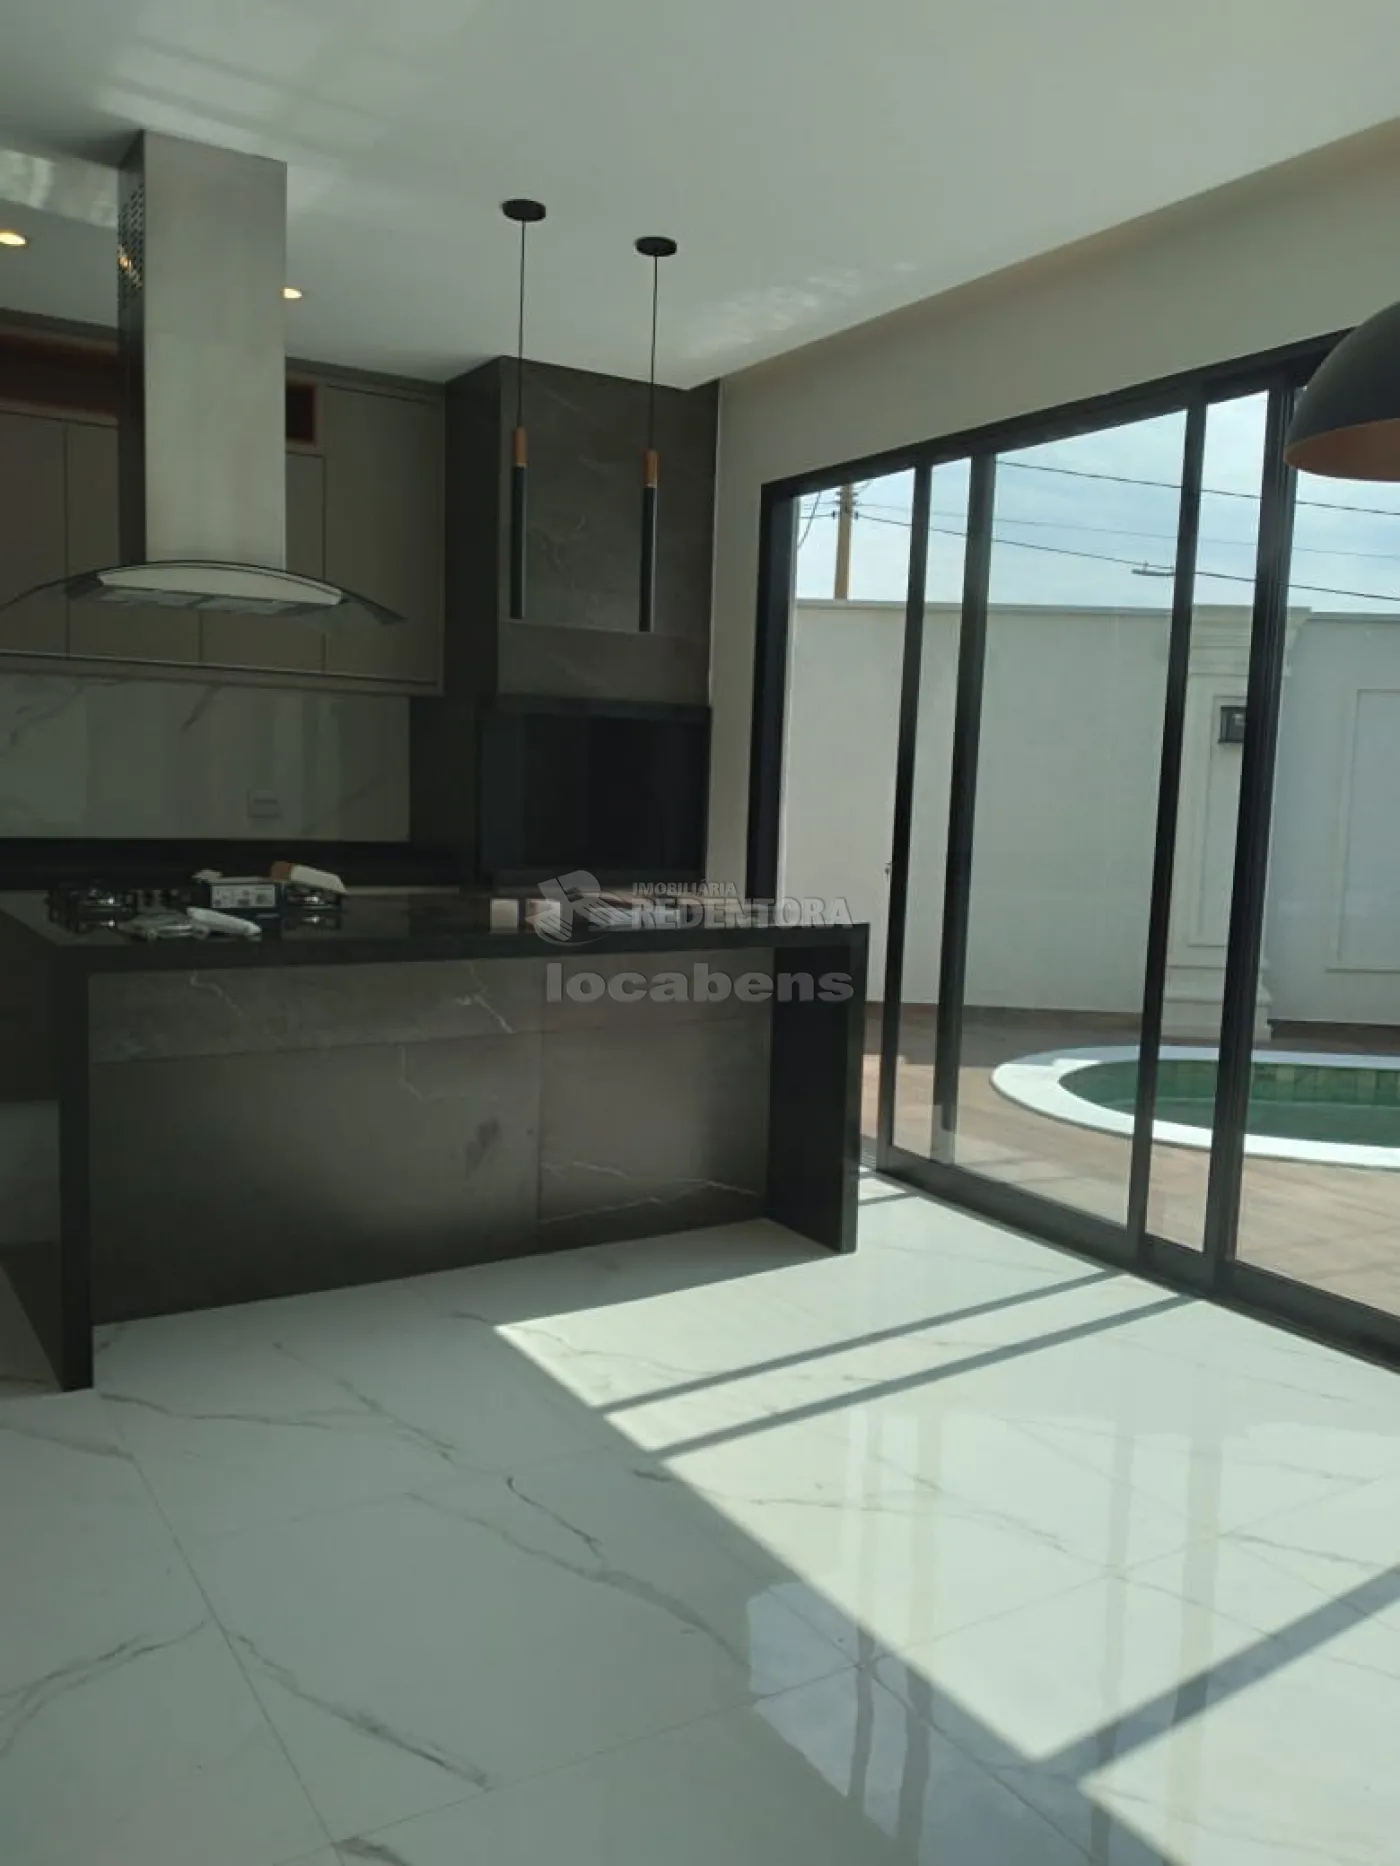 Comprar Casa / Condomínio em Mirassol R$ 1.620.000,00 - Foto 14